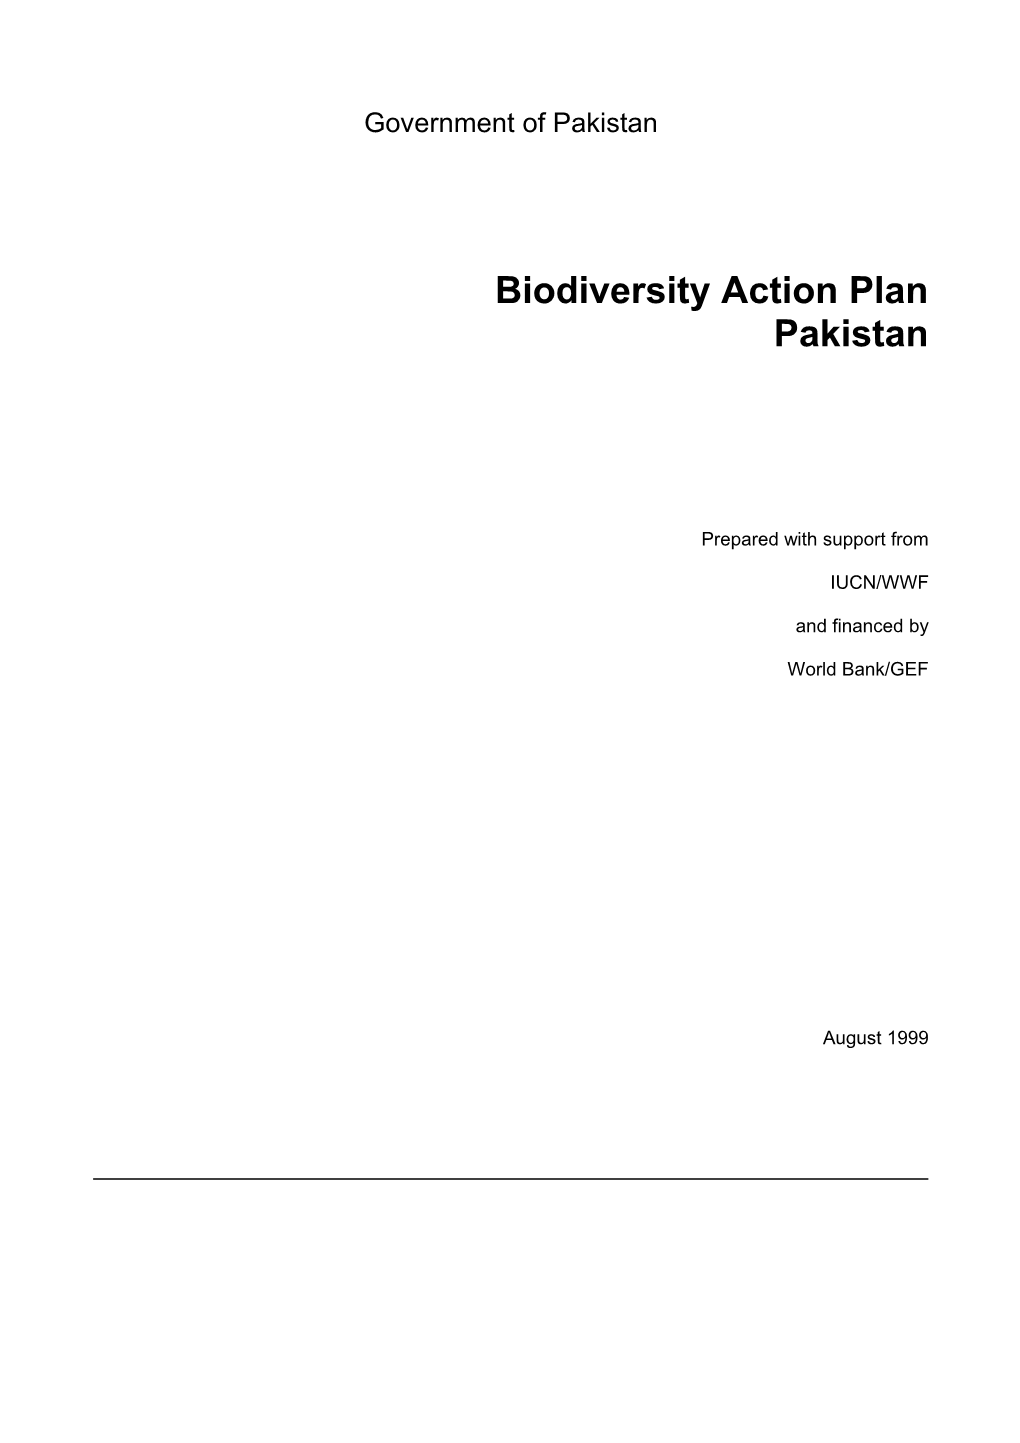 CBD Strategy and Action Plan - Pakistan (English Version)